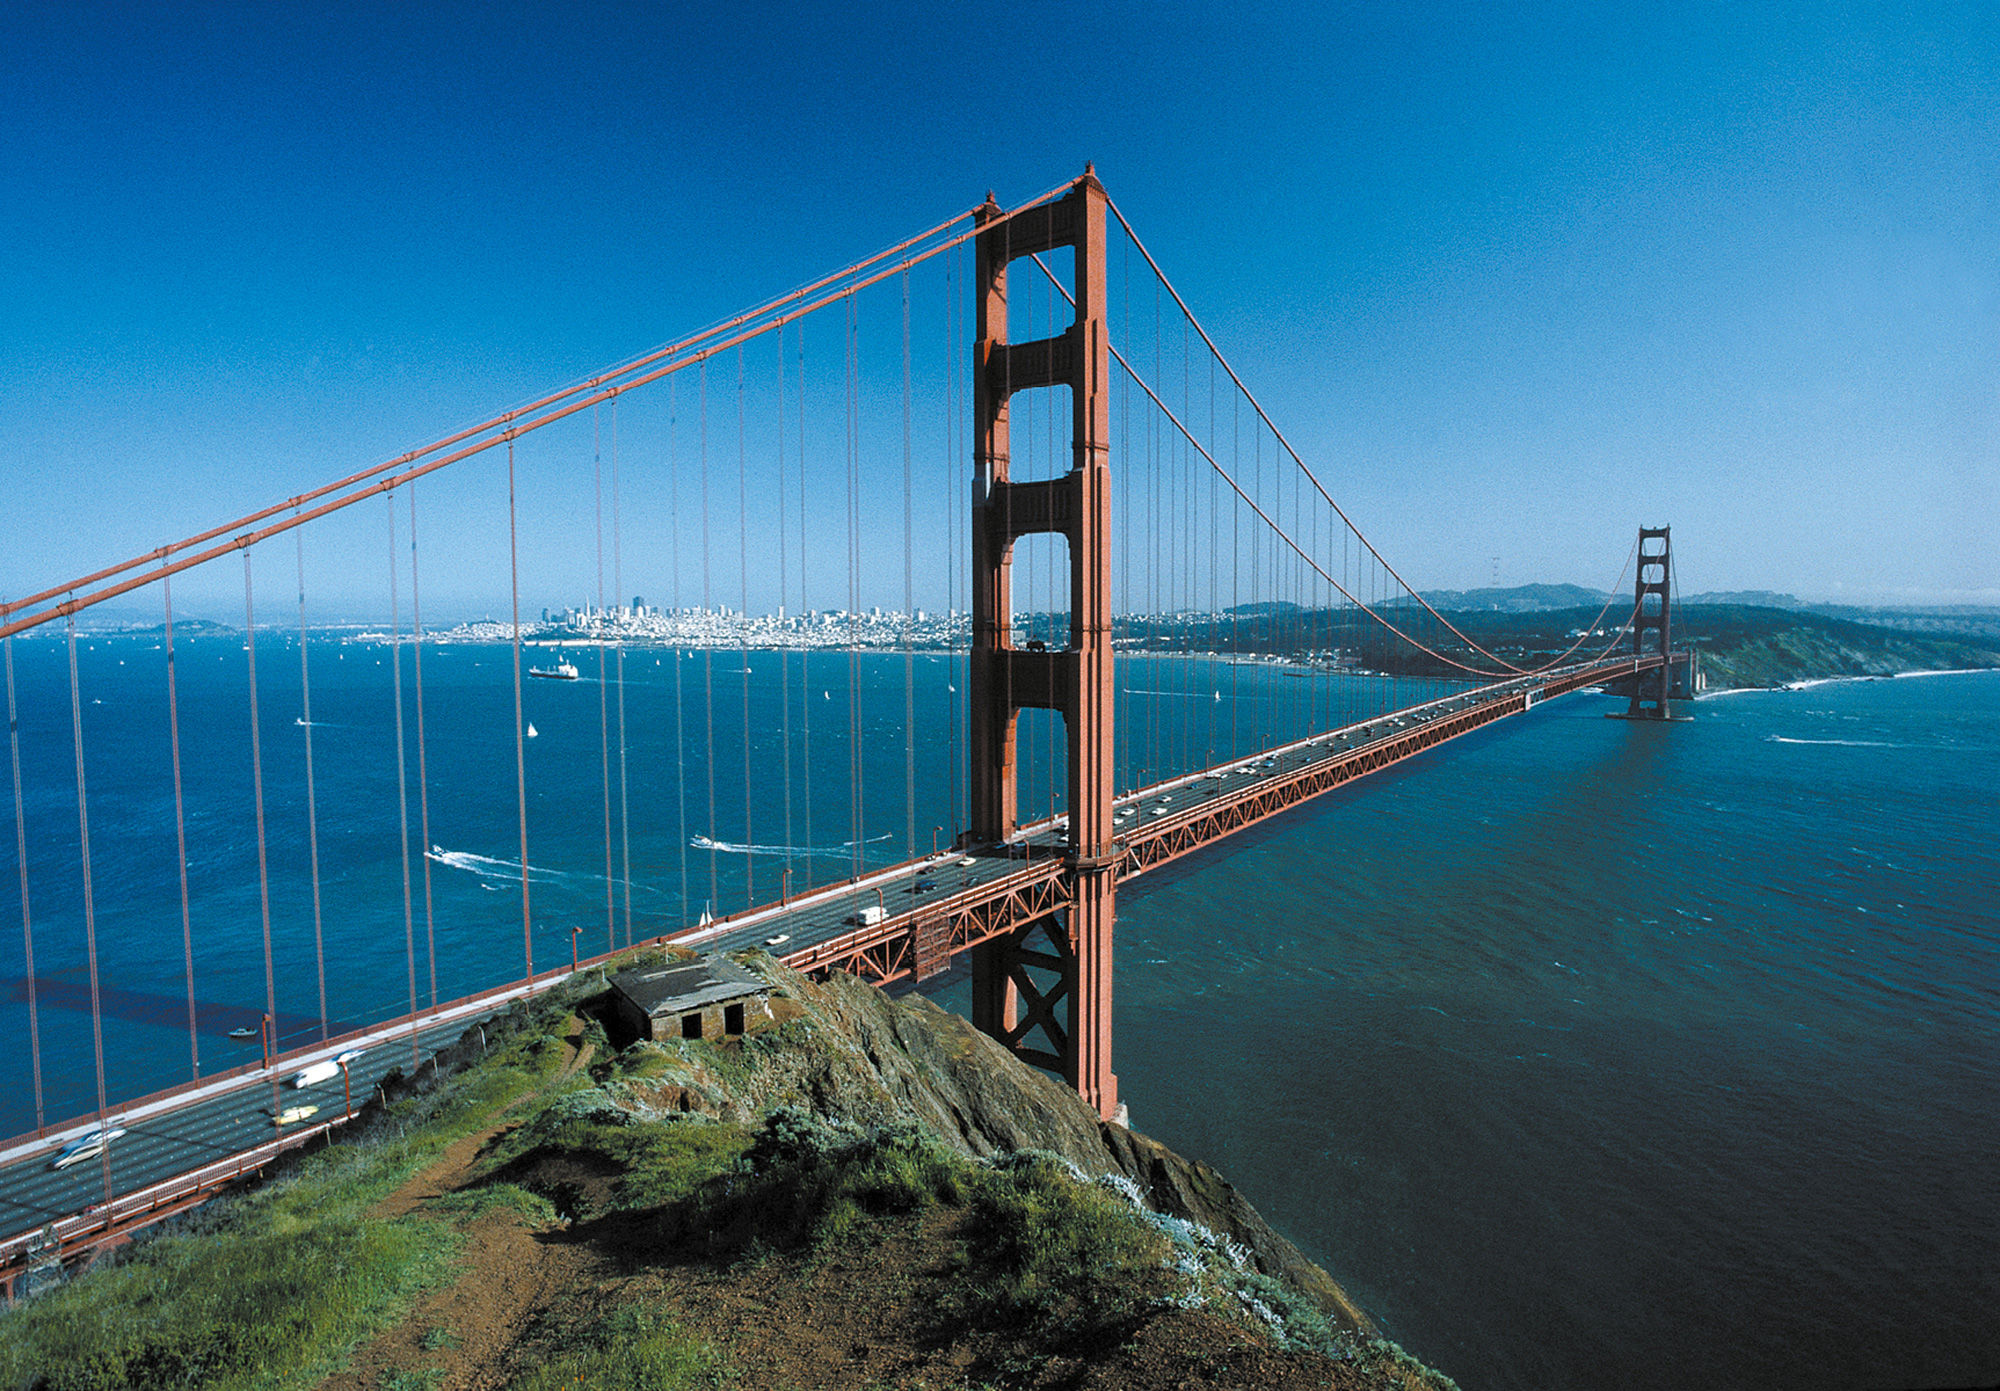 A photograph of the Golden Gate Bridge.